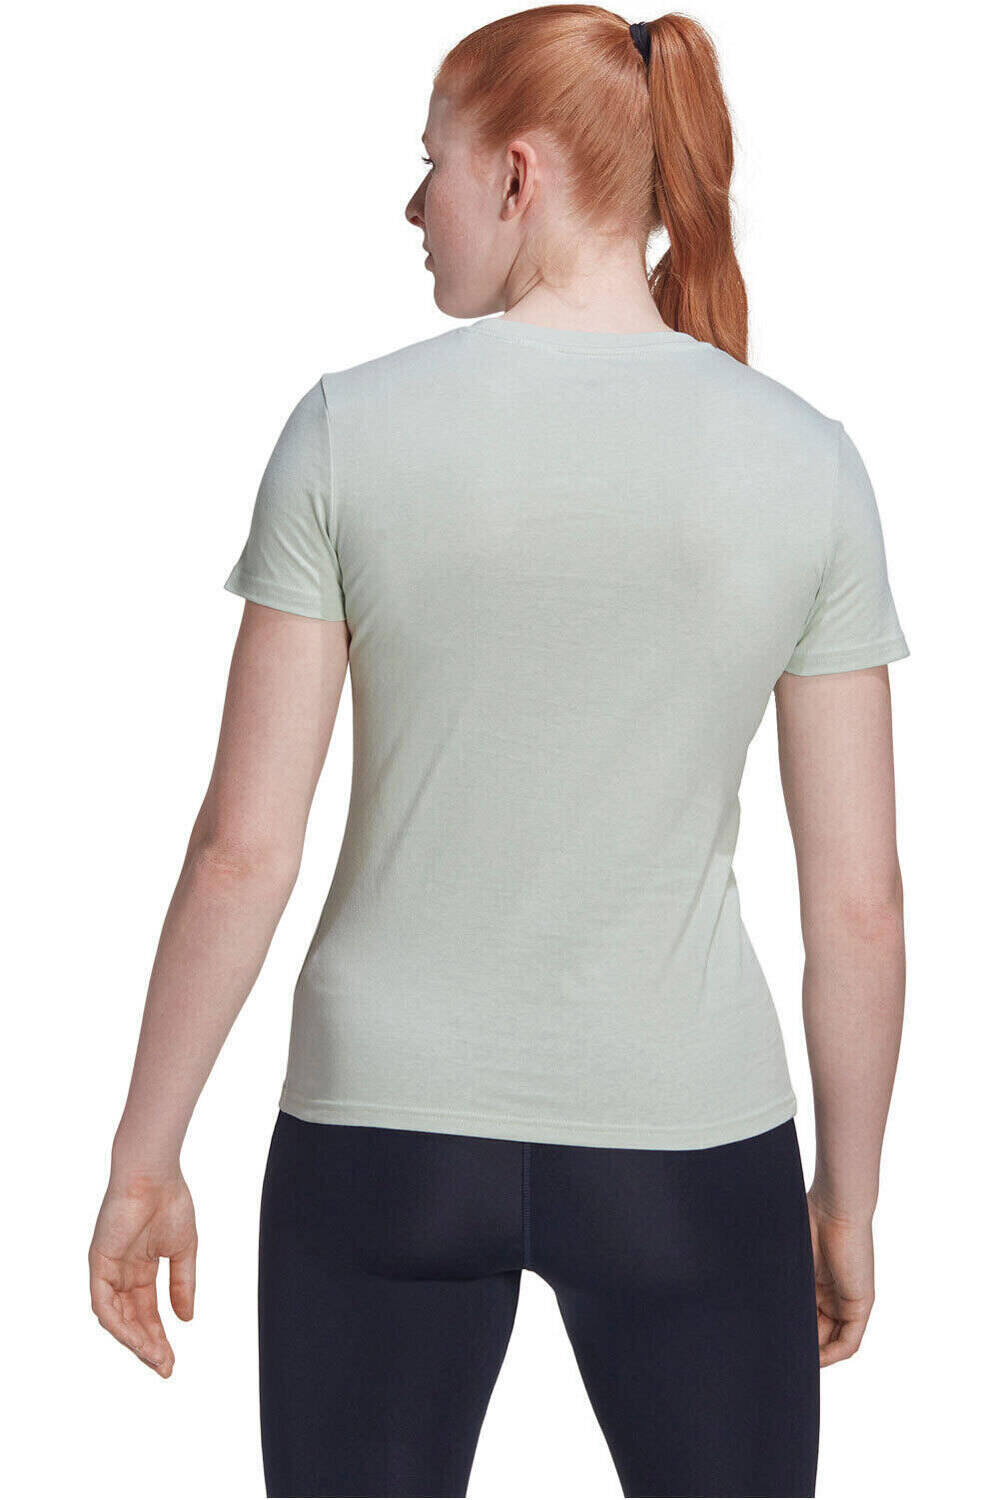 adidas camiseta montaña manga corta mujer Terrex Classic Logo vista trasera